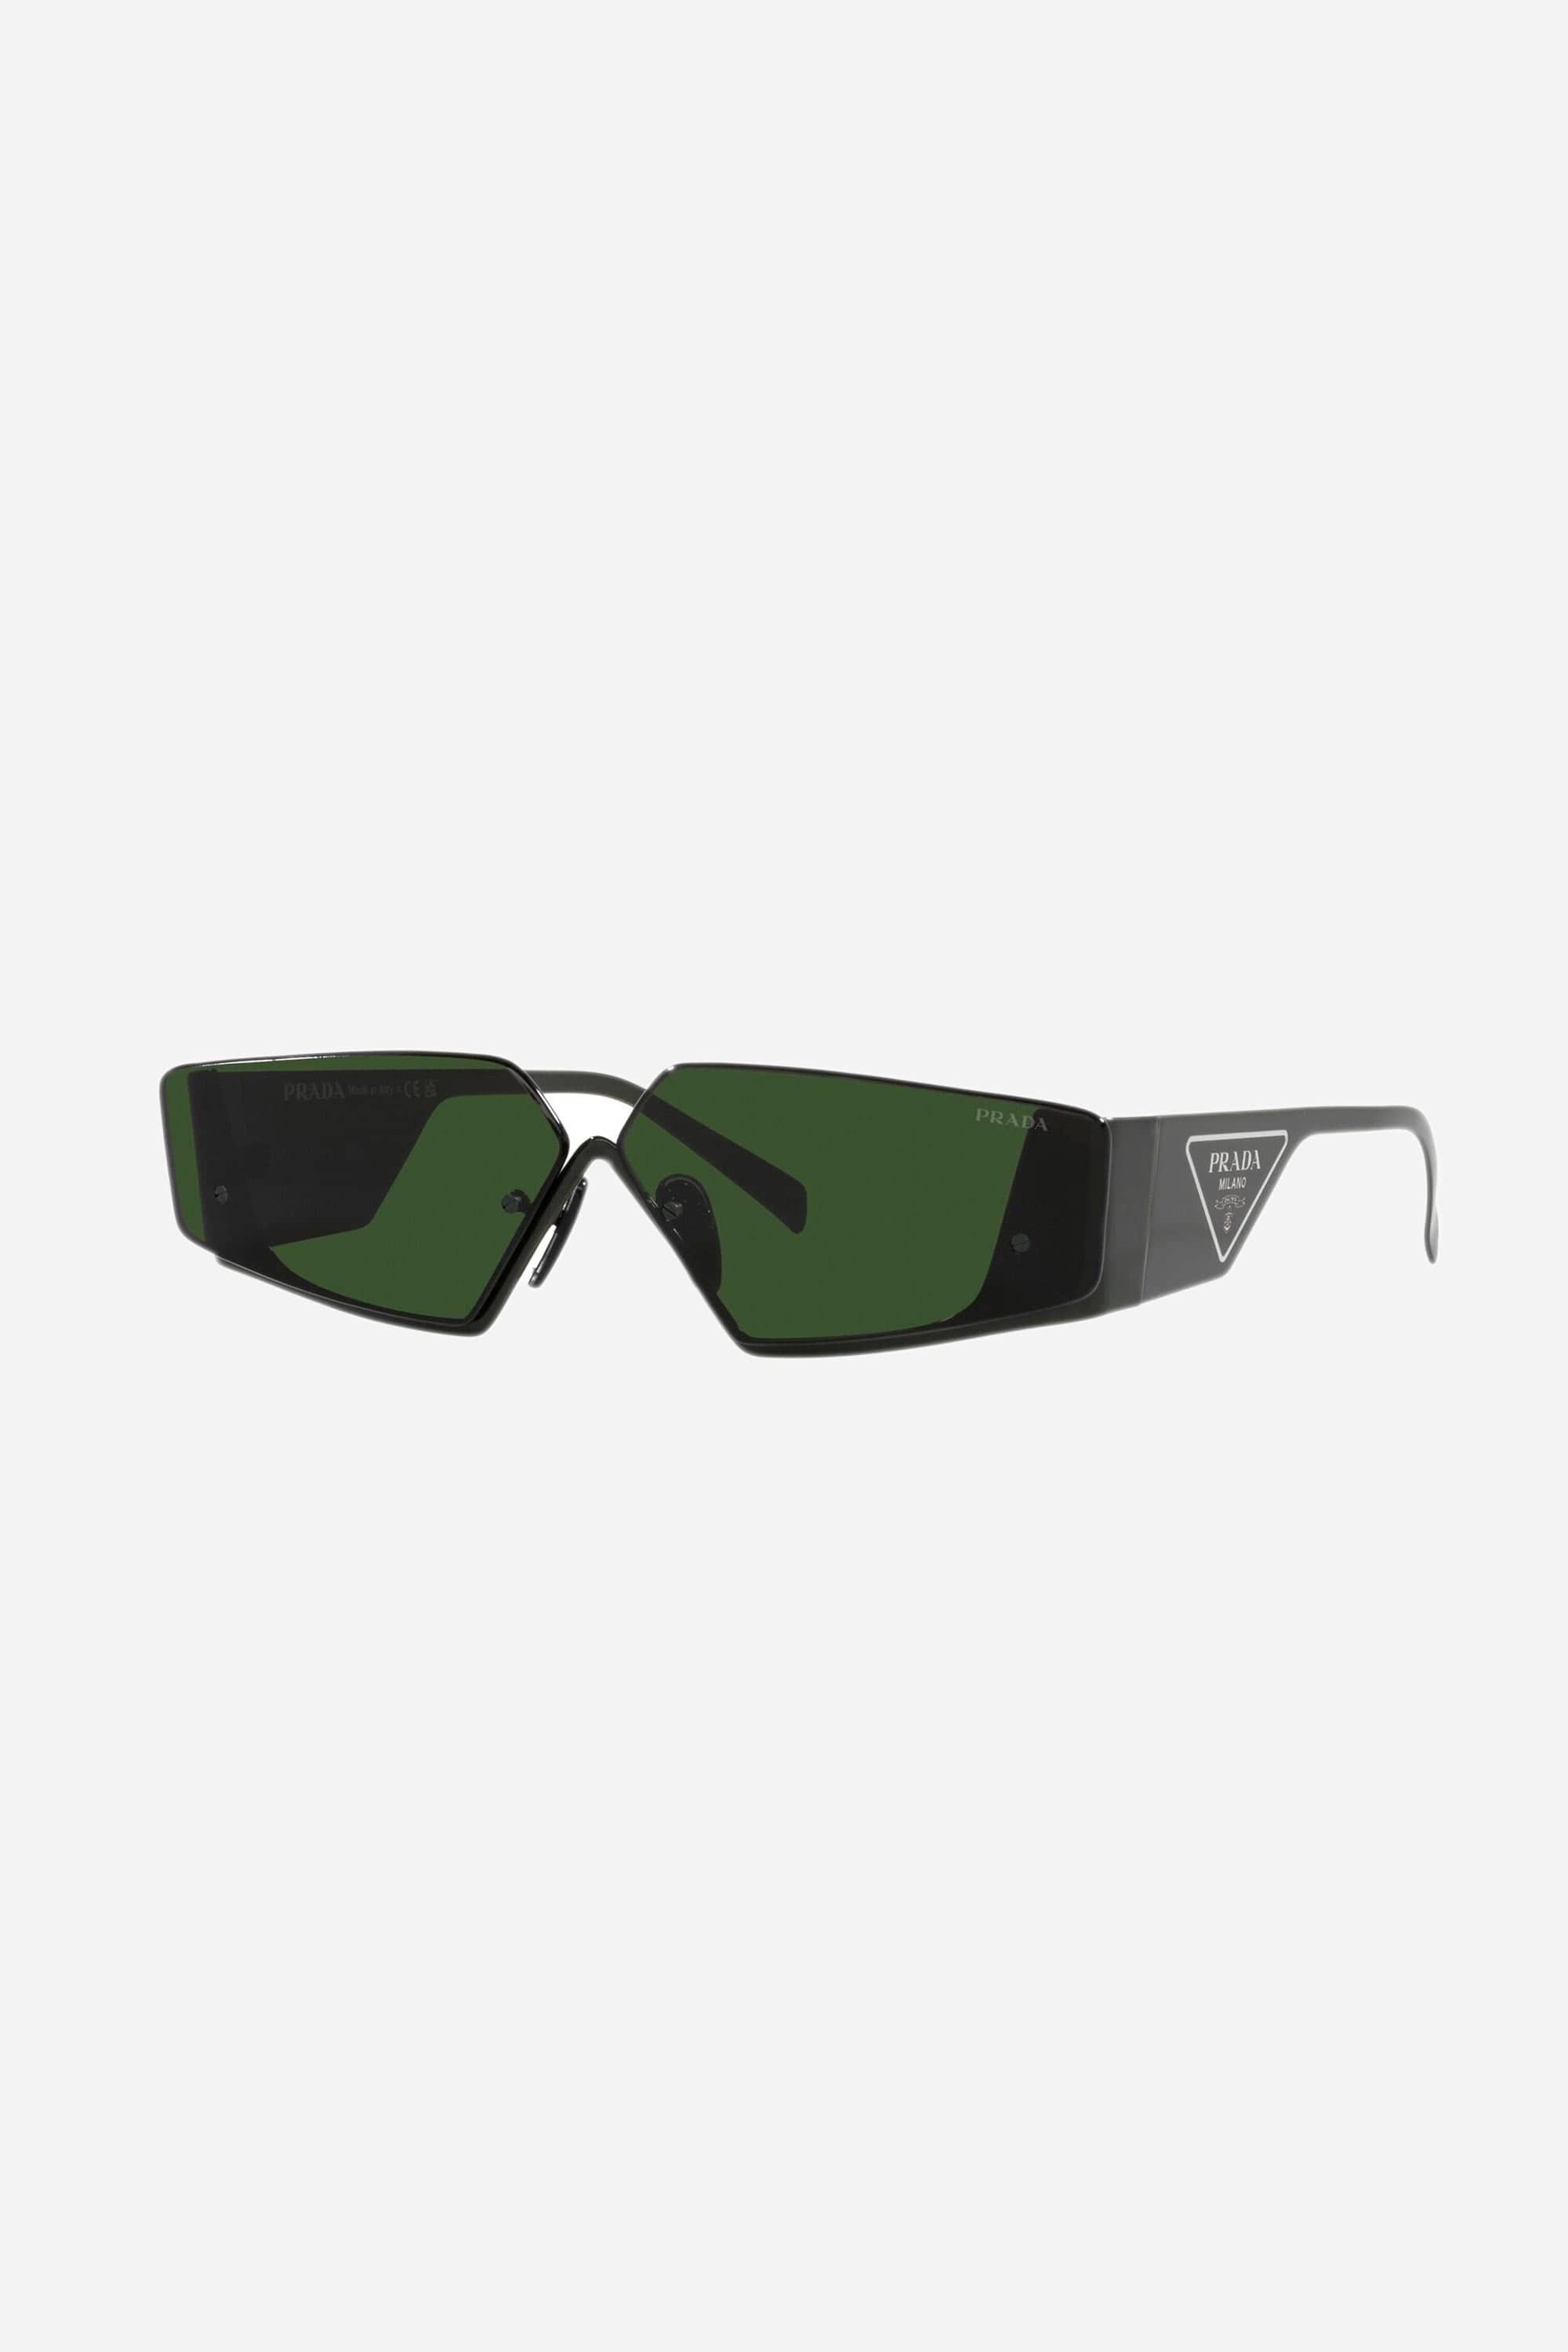 Prada Flat Top Green Sunglasses Man Catwalk for Men | Lyst